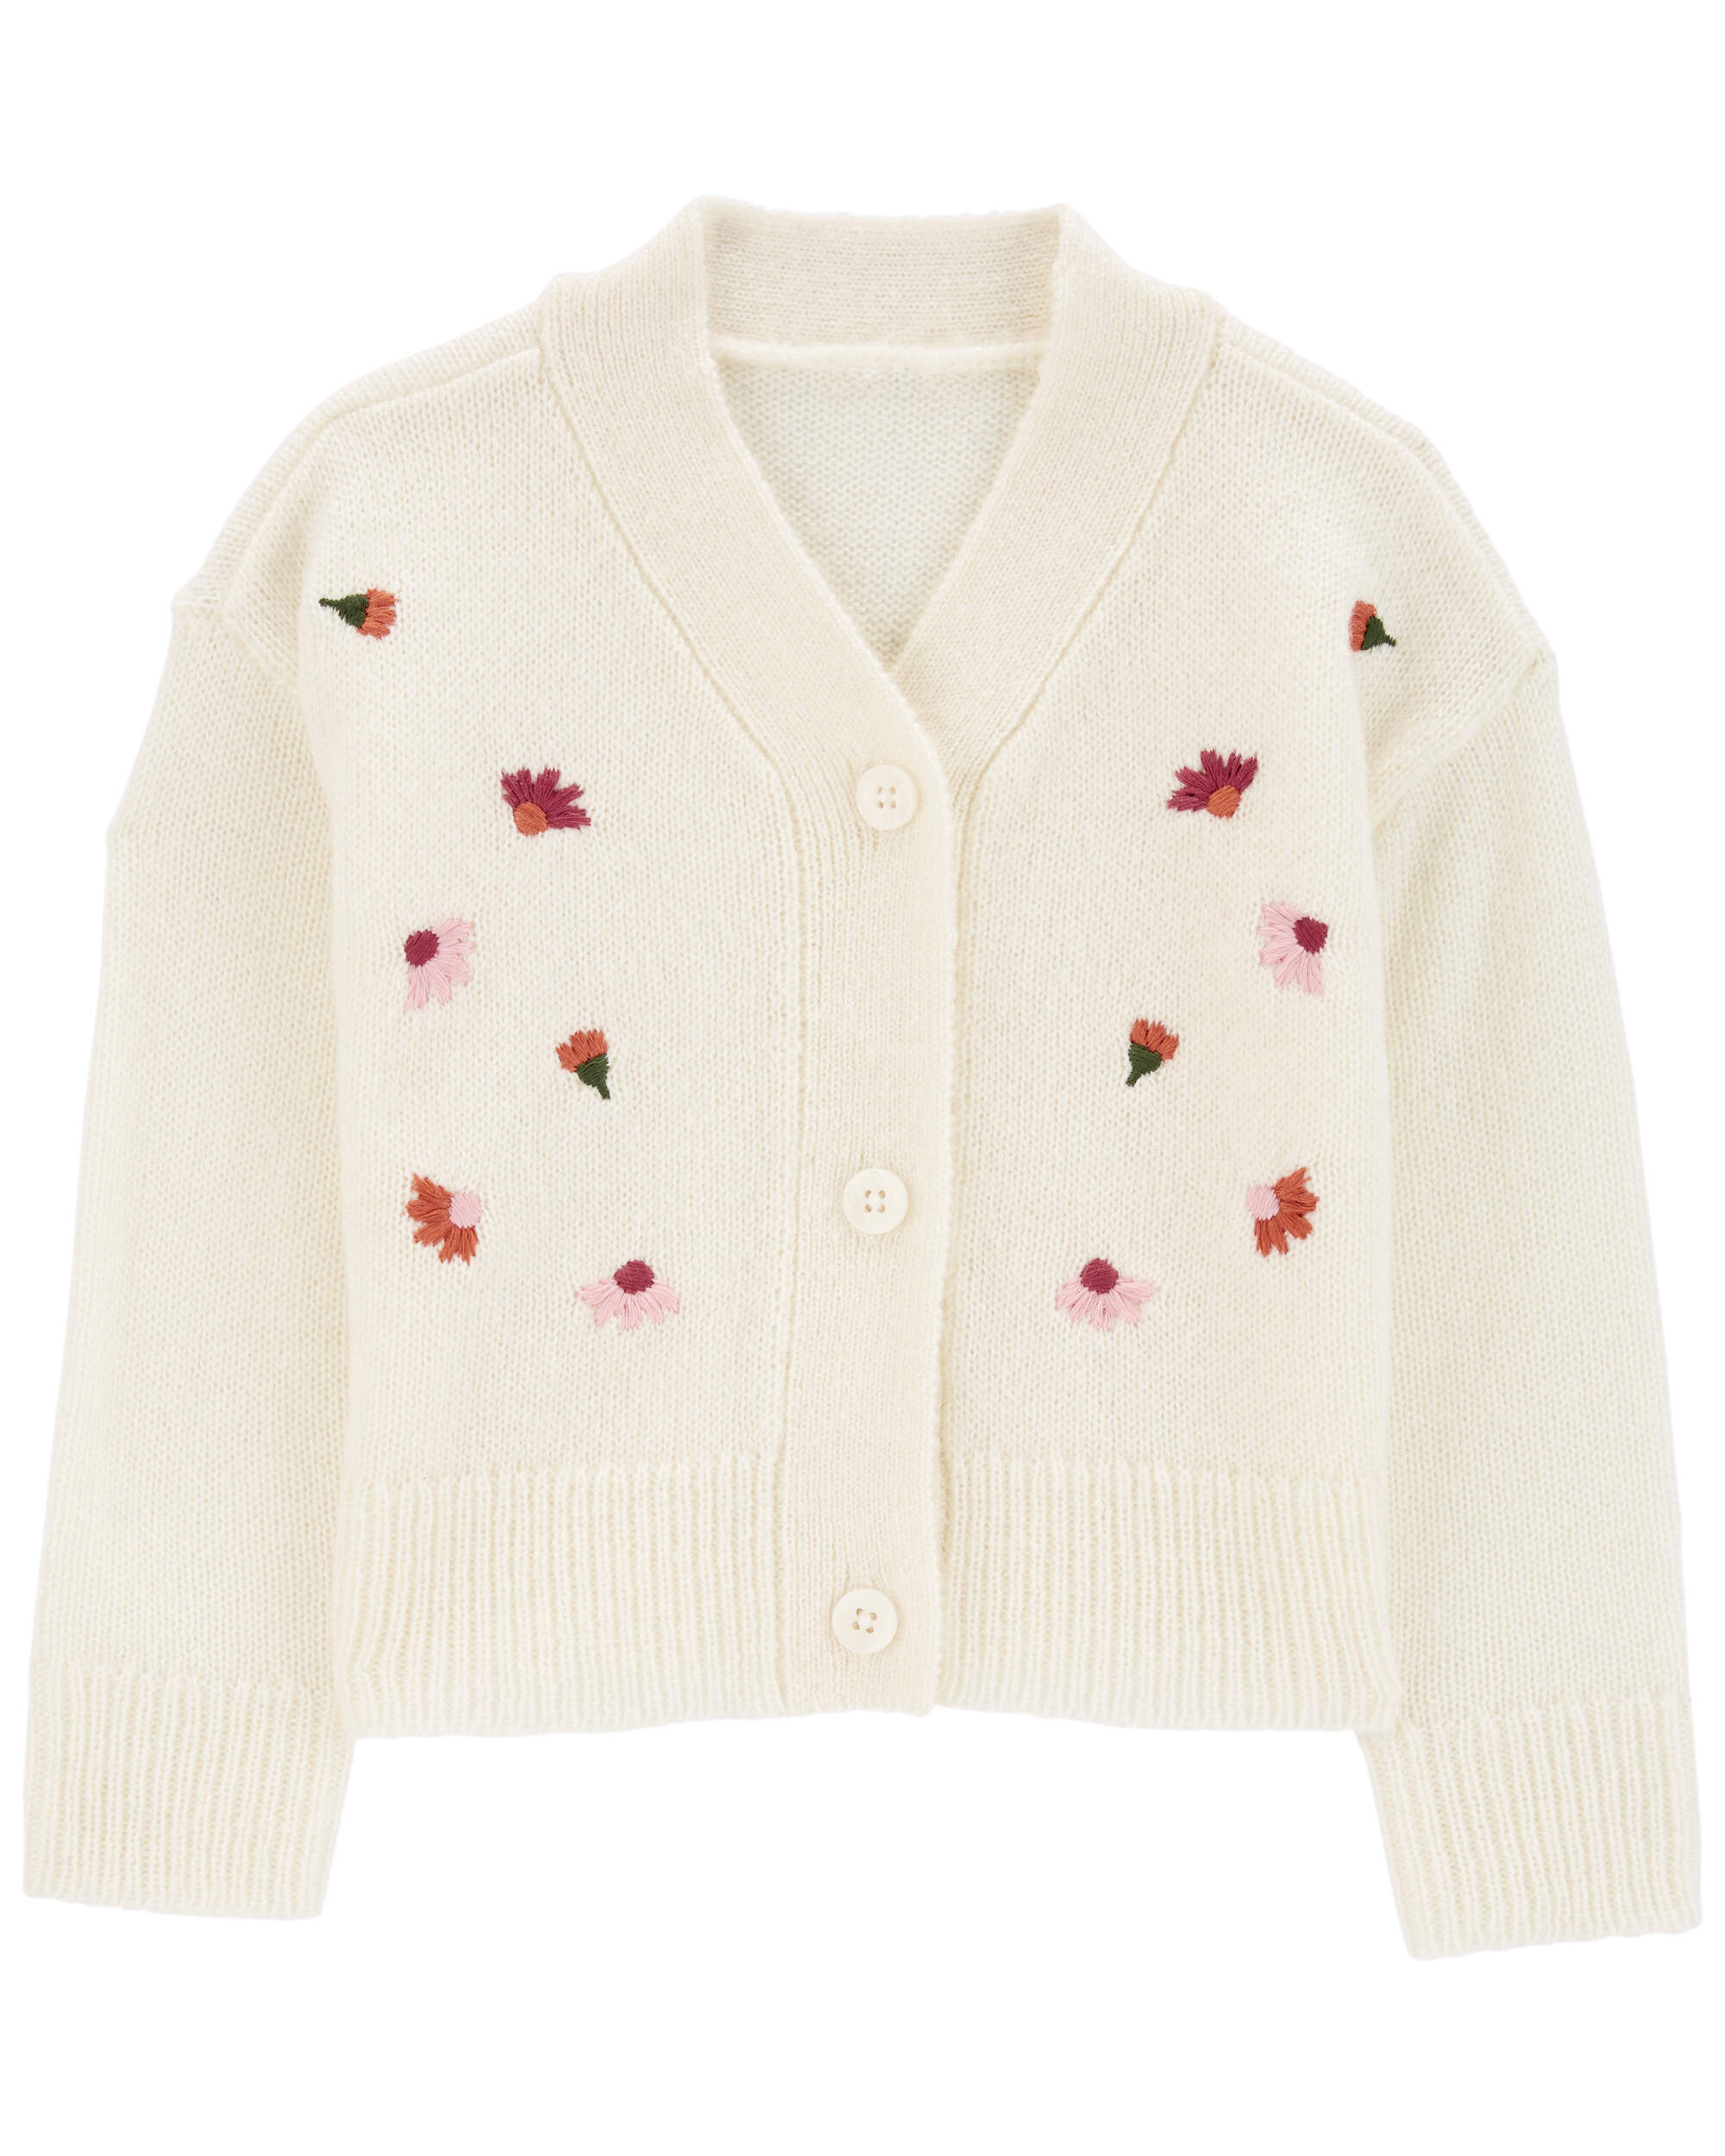 Toddler Floral Sweater Knit Cardigan